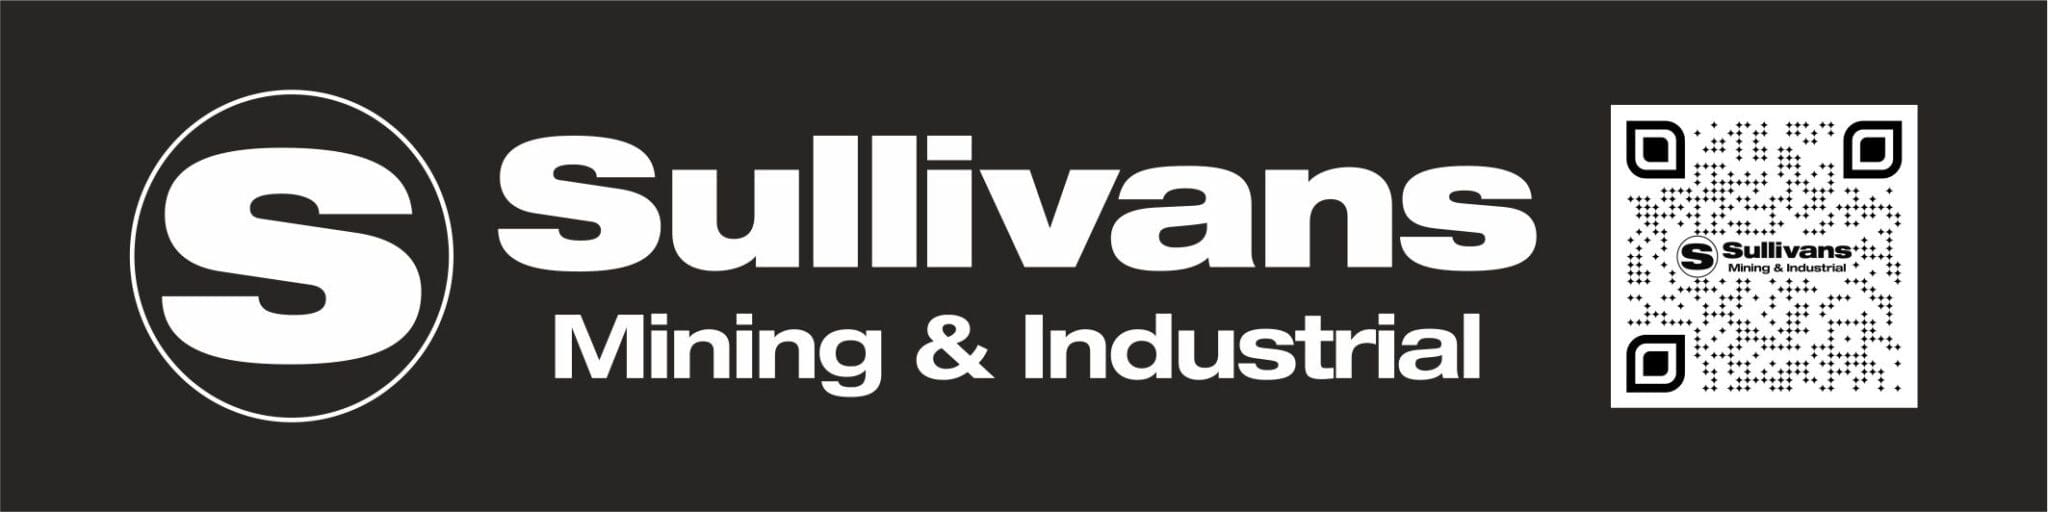 Sullivans Mining and Industrial sponsor banner